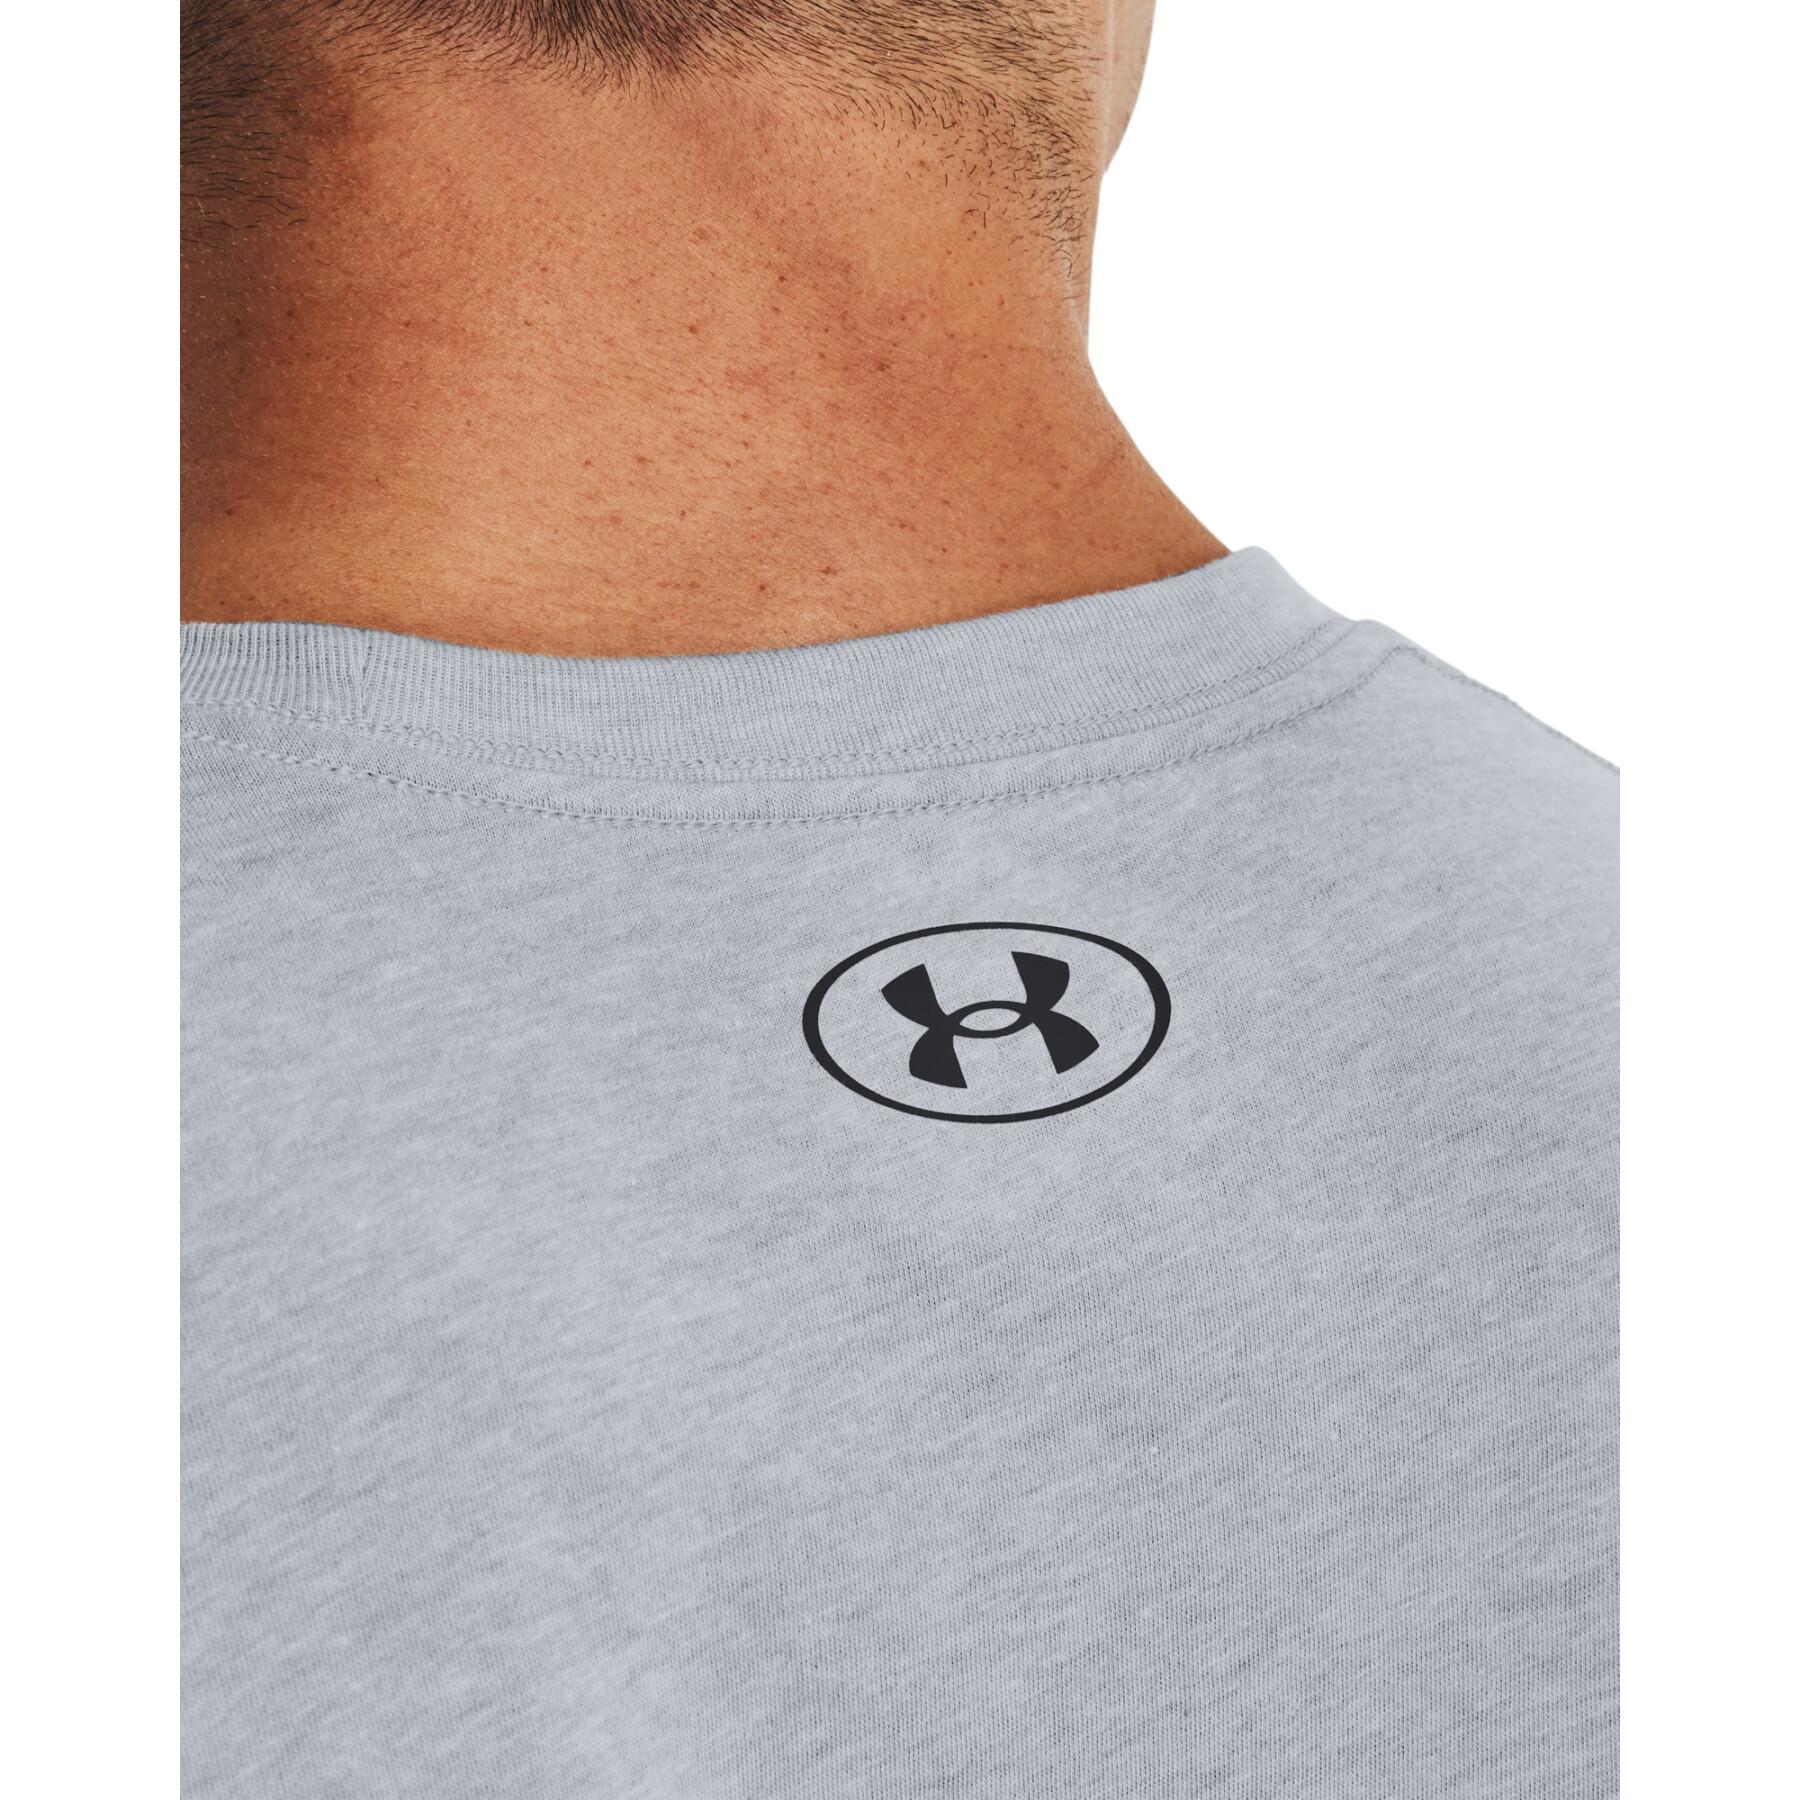 T-shirt Under Armour Bball Branded Wordmark